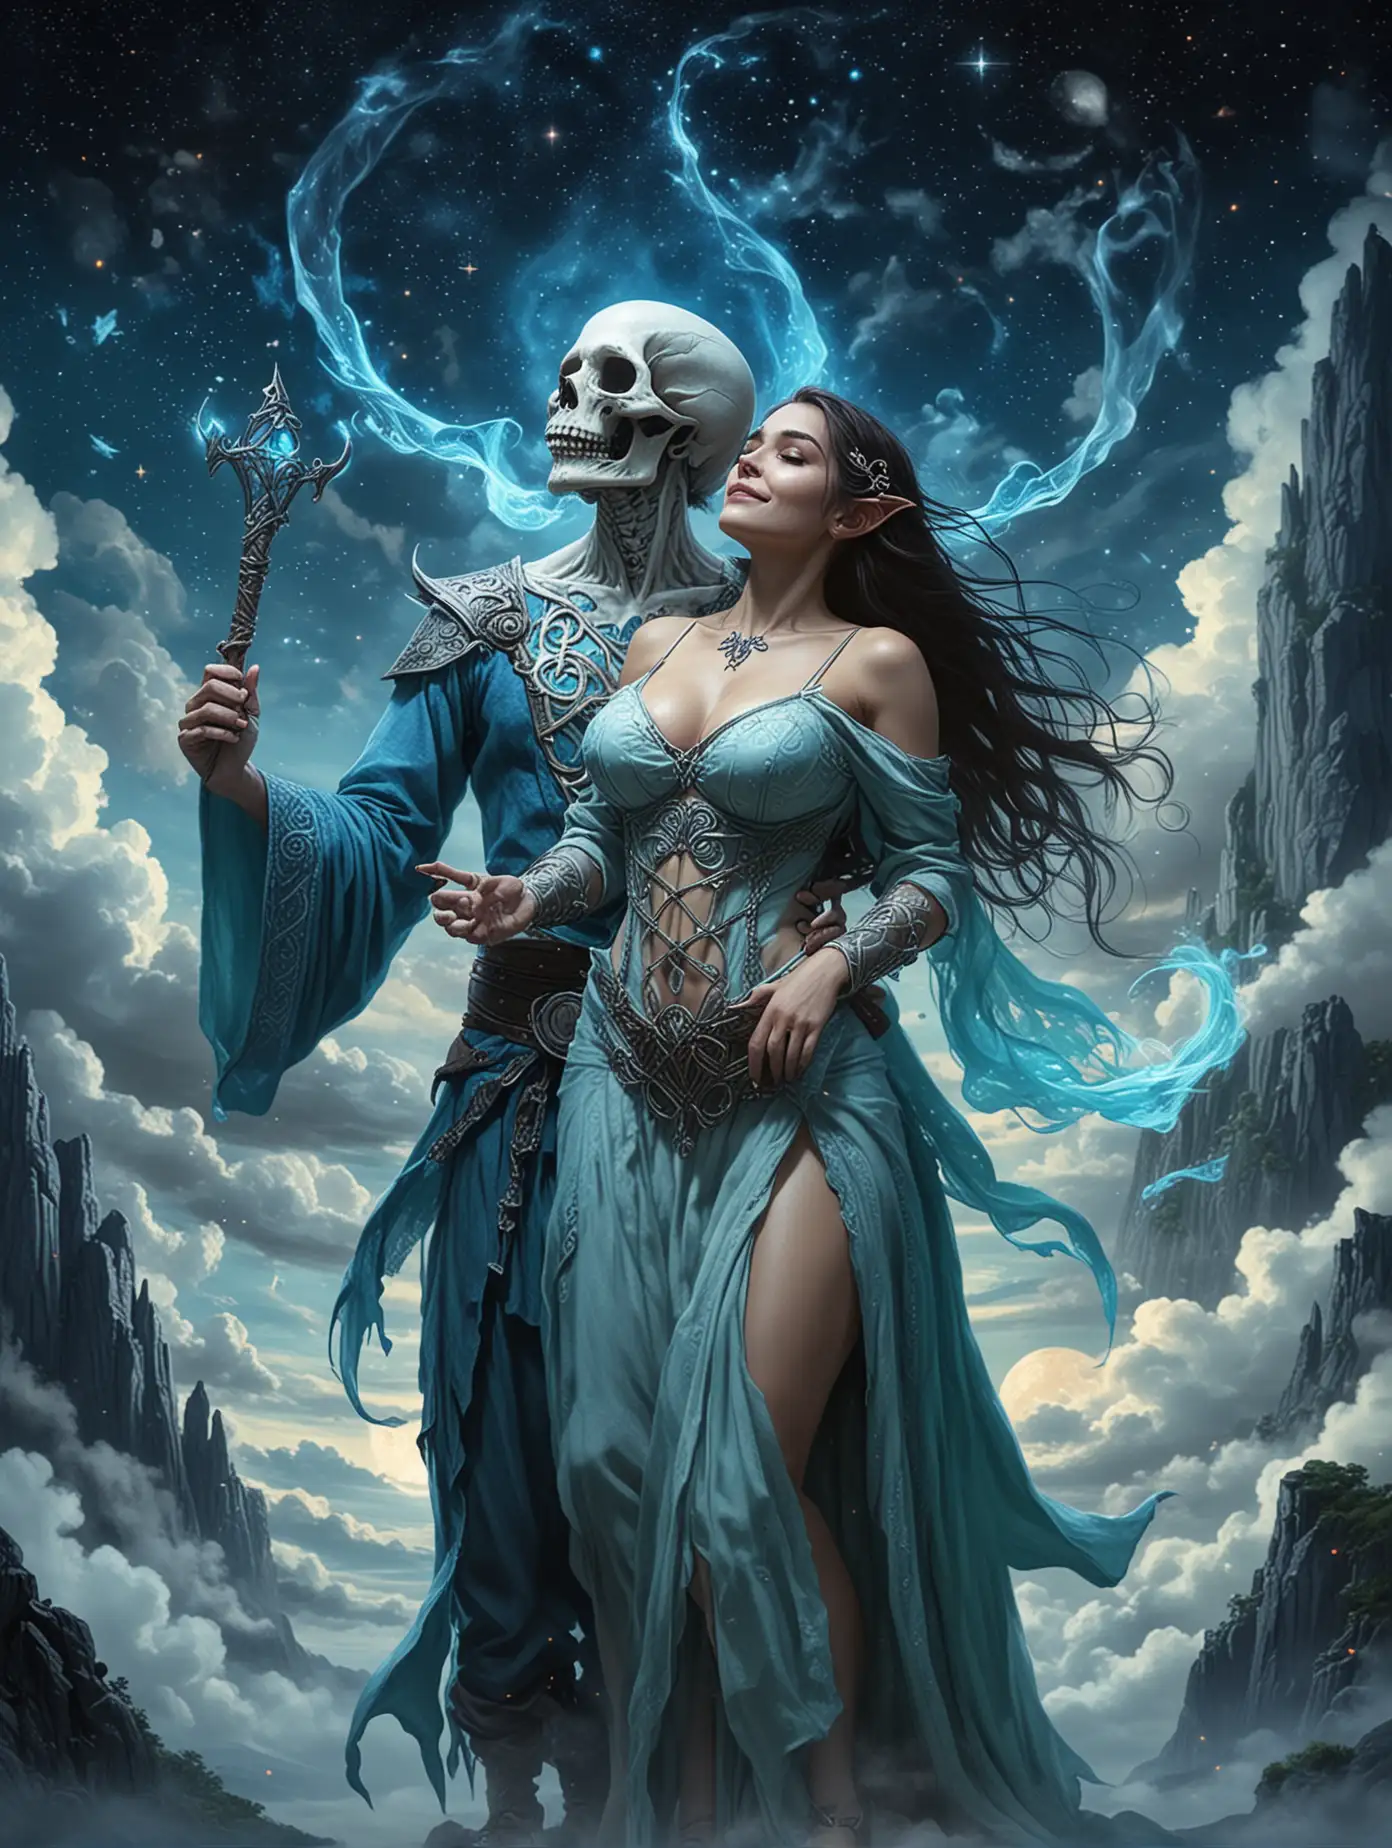 Elven Sorceress Summoning Skull Spirits with Hobbit Lover in Night Sky